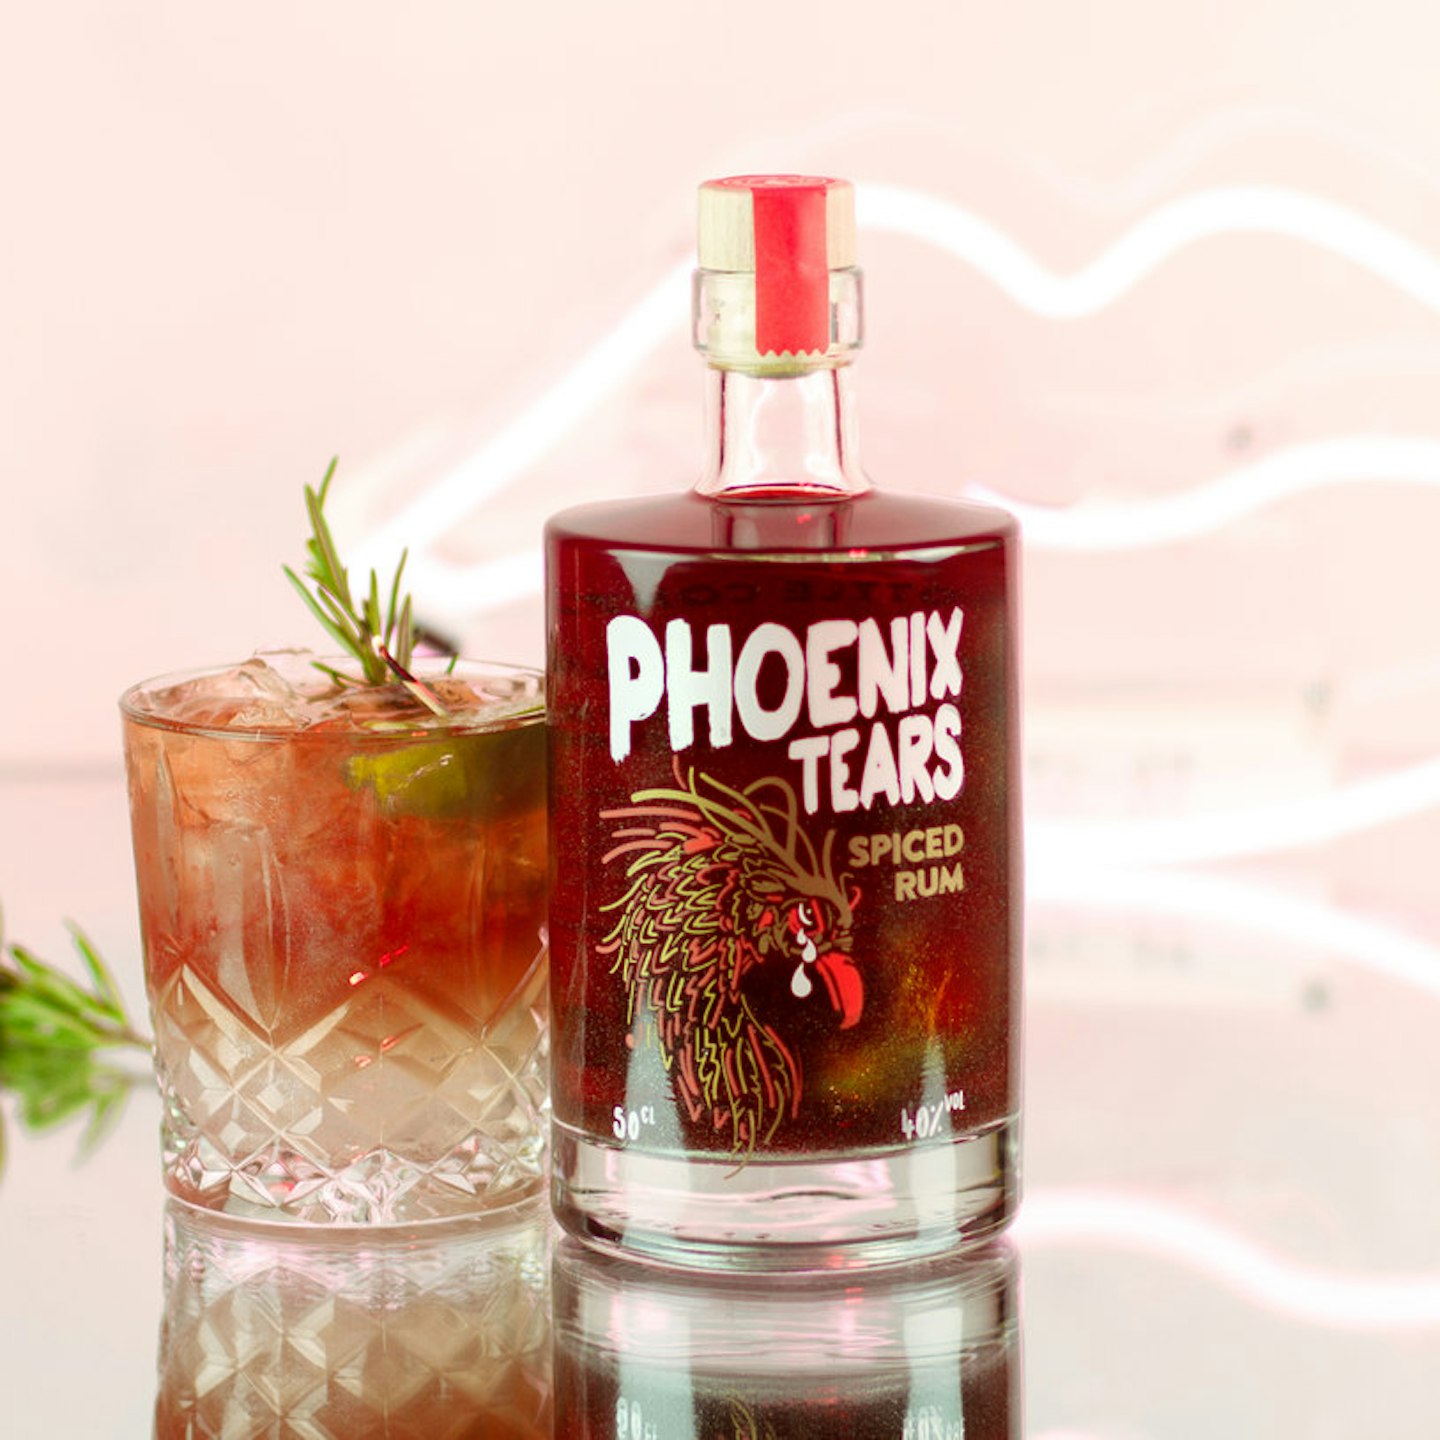 Phoenix Tears Spiced Rum, £39.99